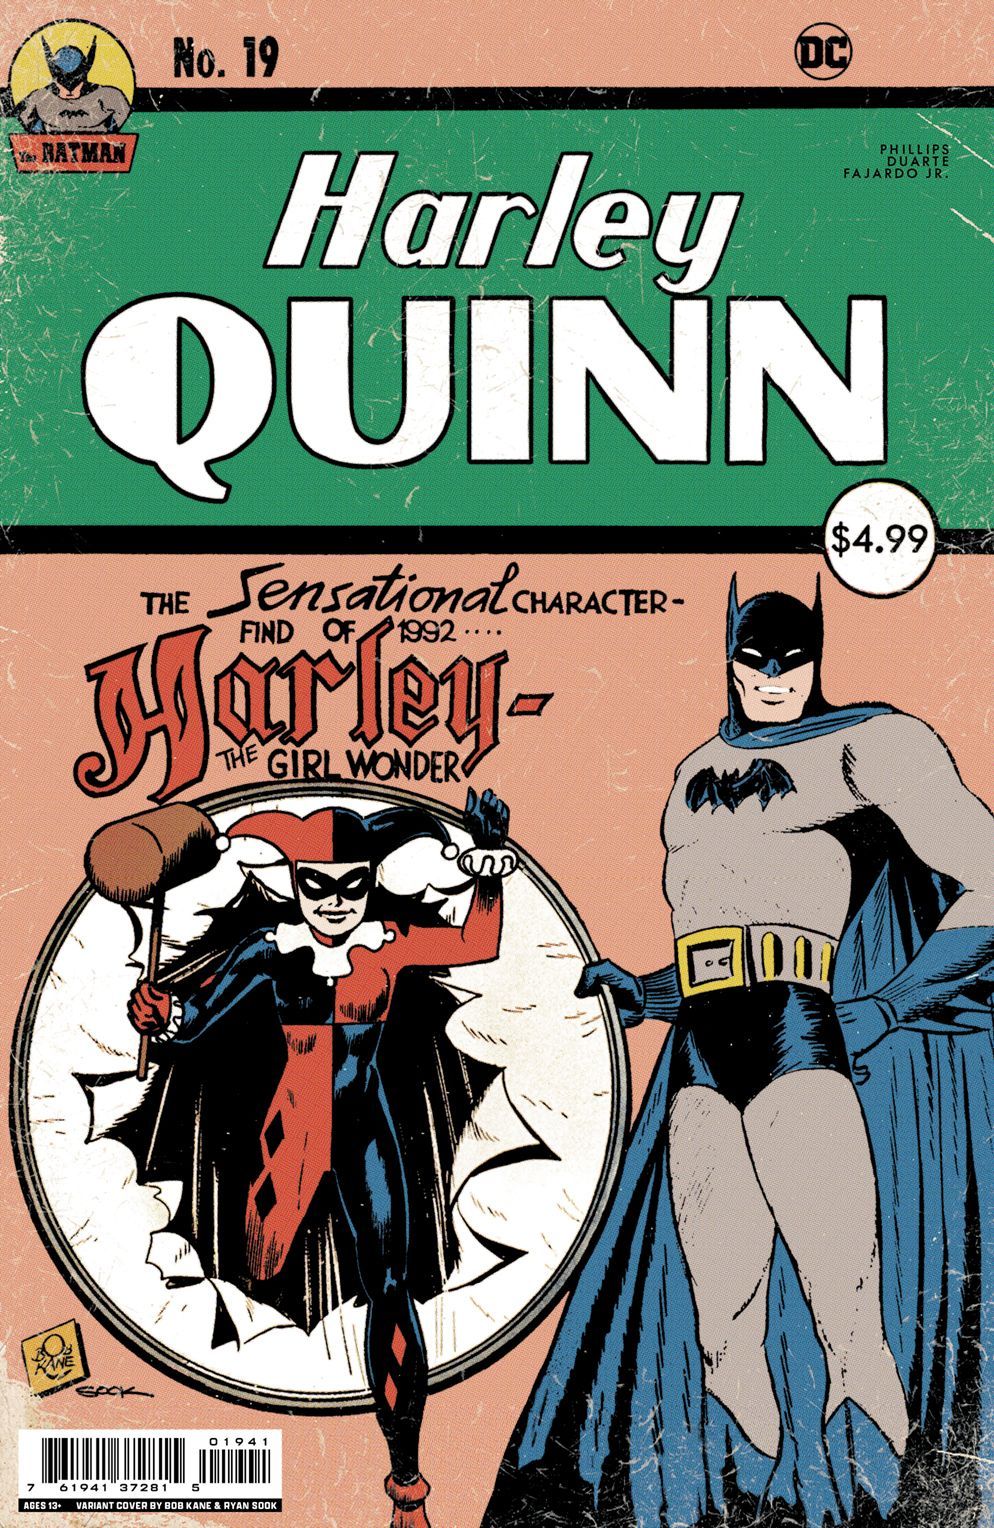 Harley Quinn #19 cover